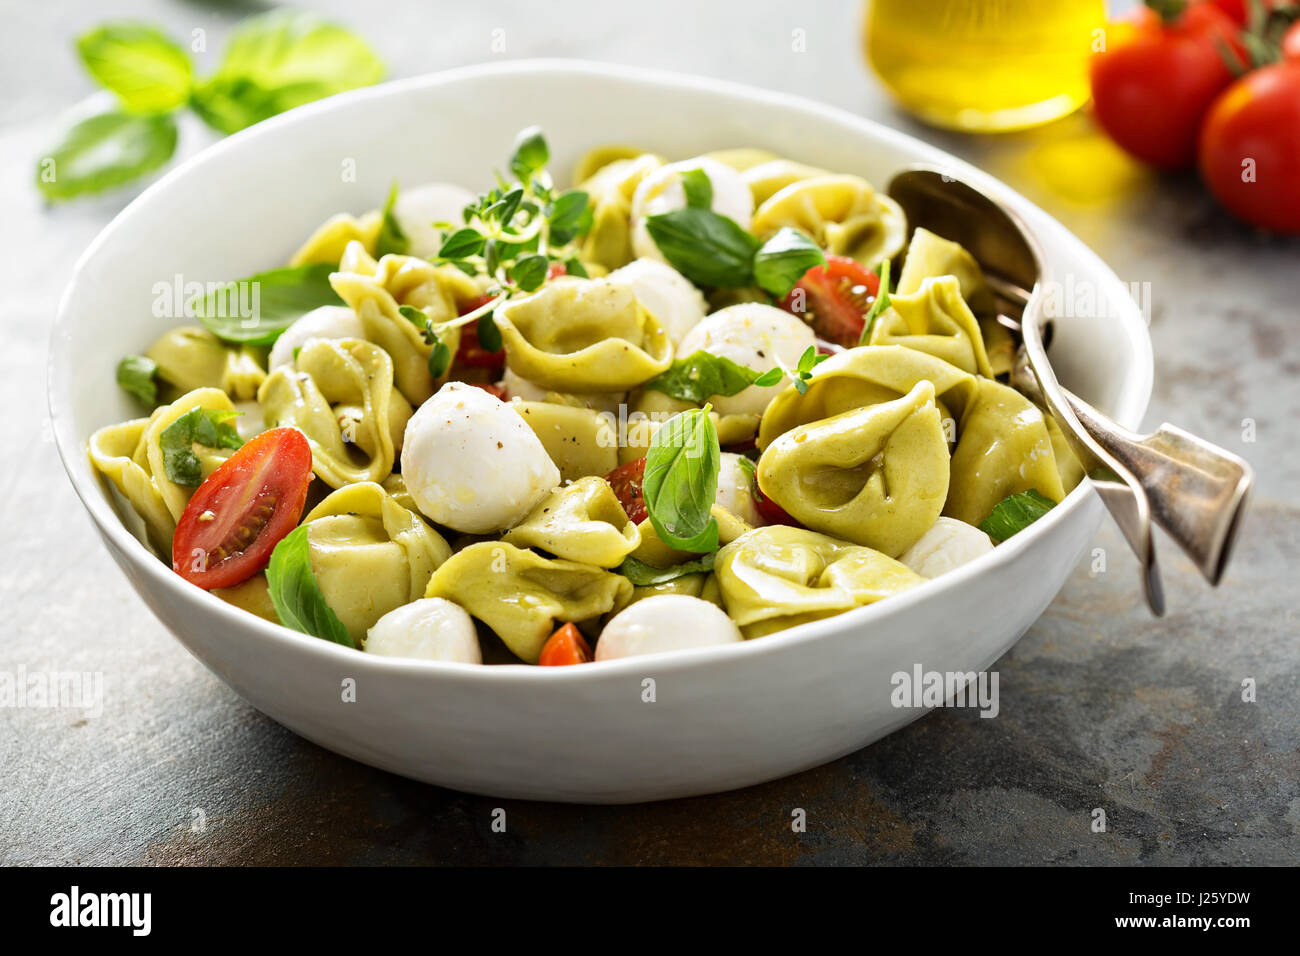 Italian pasta salad with spinach ricotta tortellini, mozzarella ...